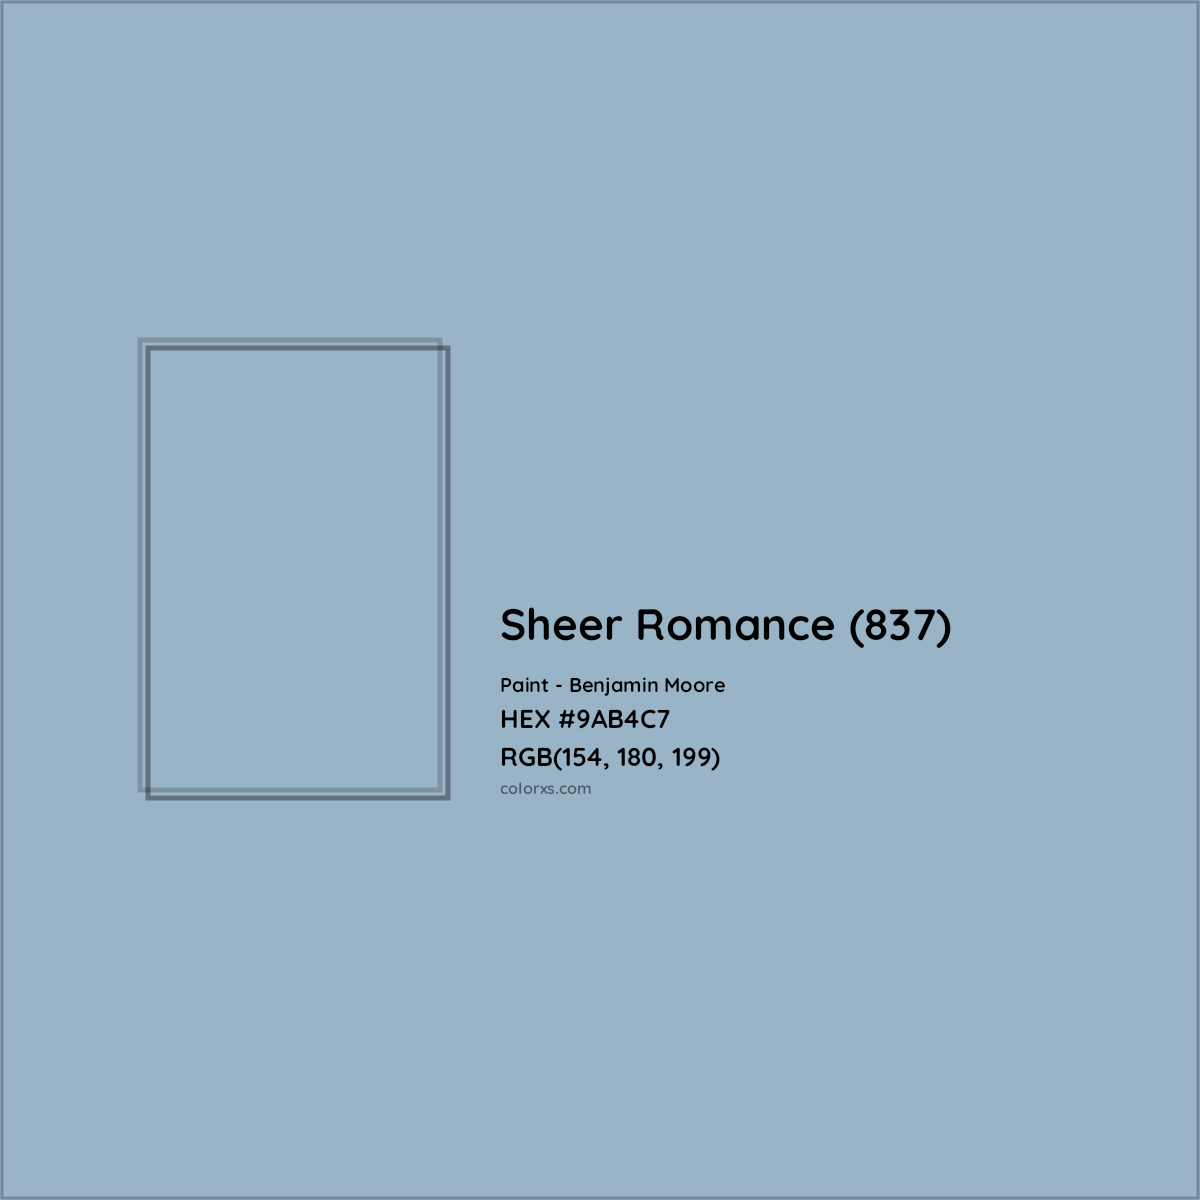 HEX #9AB4C7 Sheer Romance (837) Paint Benjamin Moore - Color Code